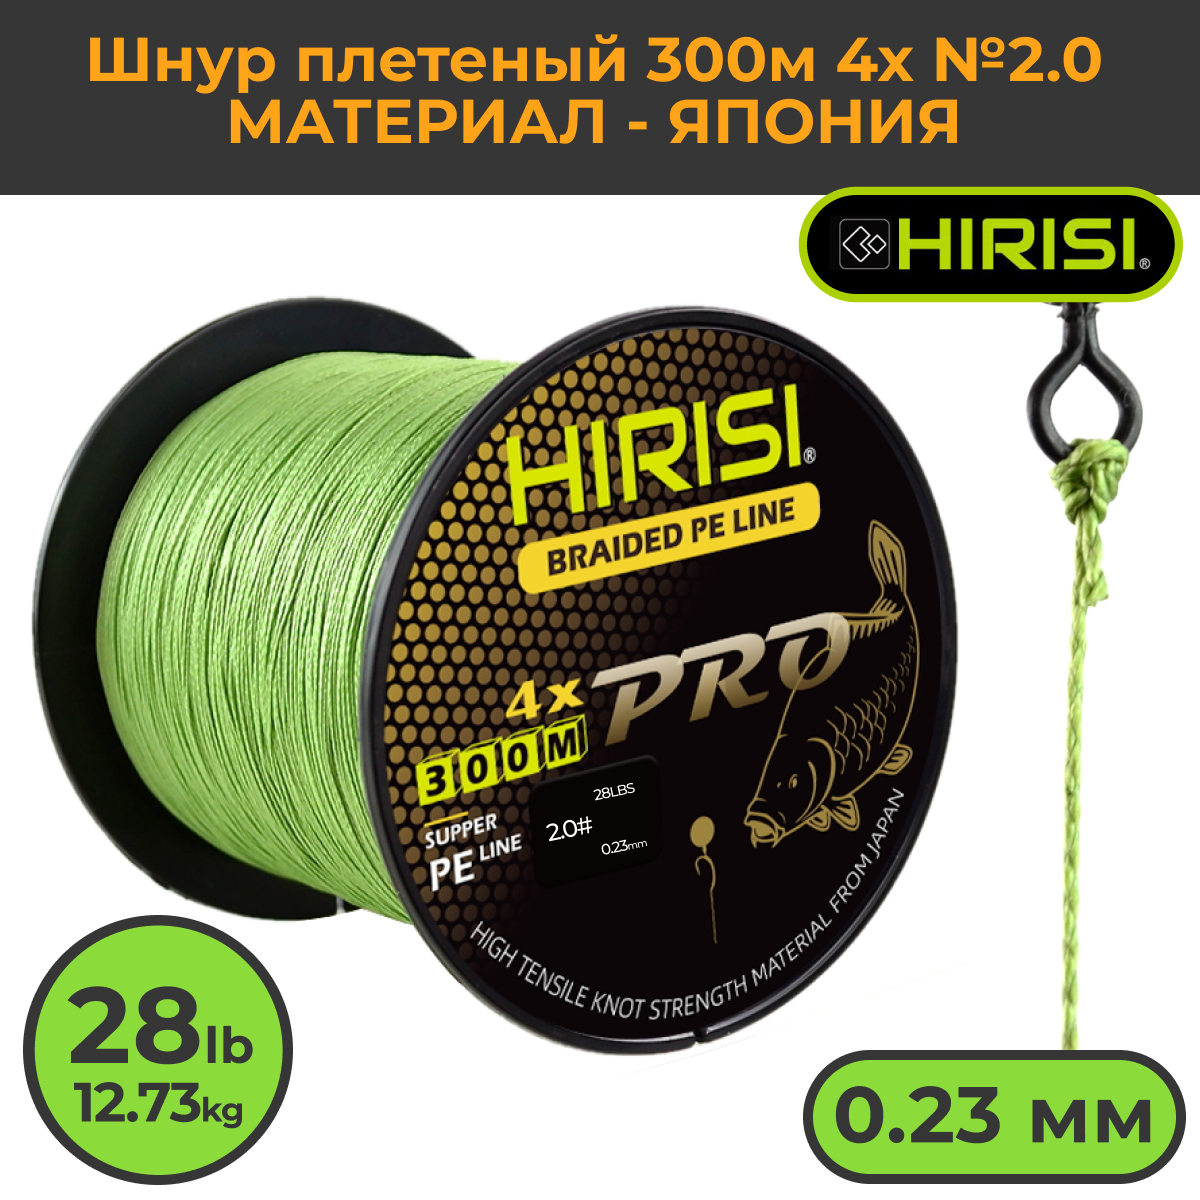 Шнур плетеный HIRISI №2.0 300м 28LB (12,73 кг) (Braided Pe Line №2.0_28LB) зеленый